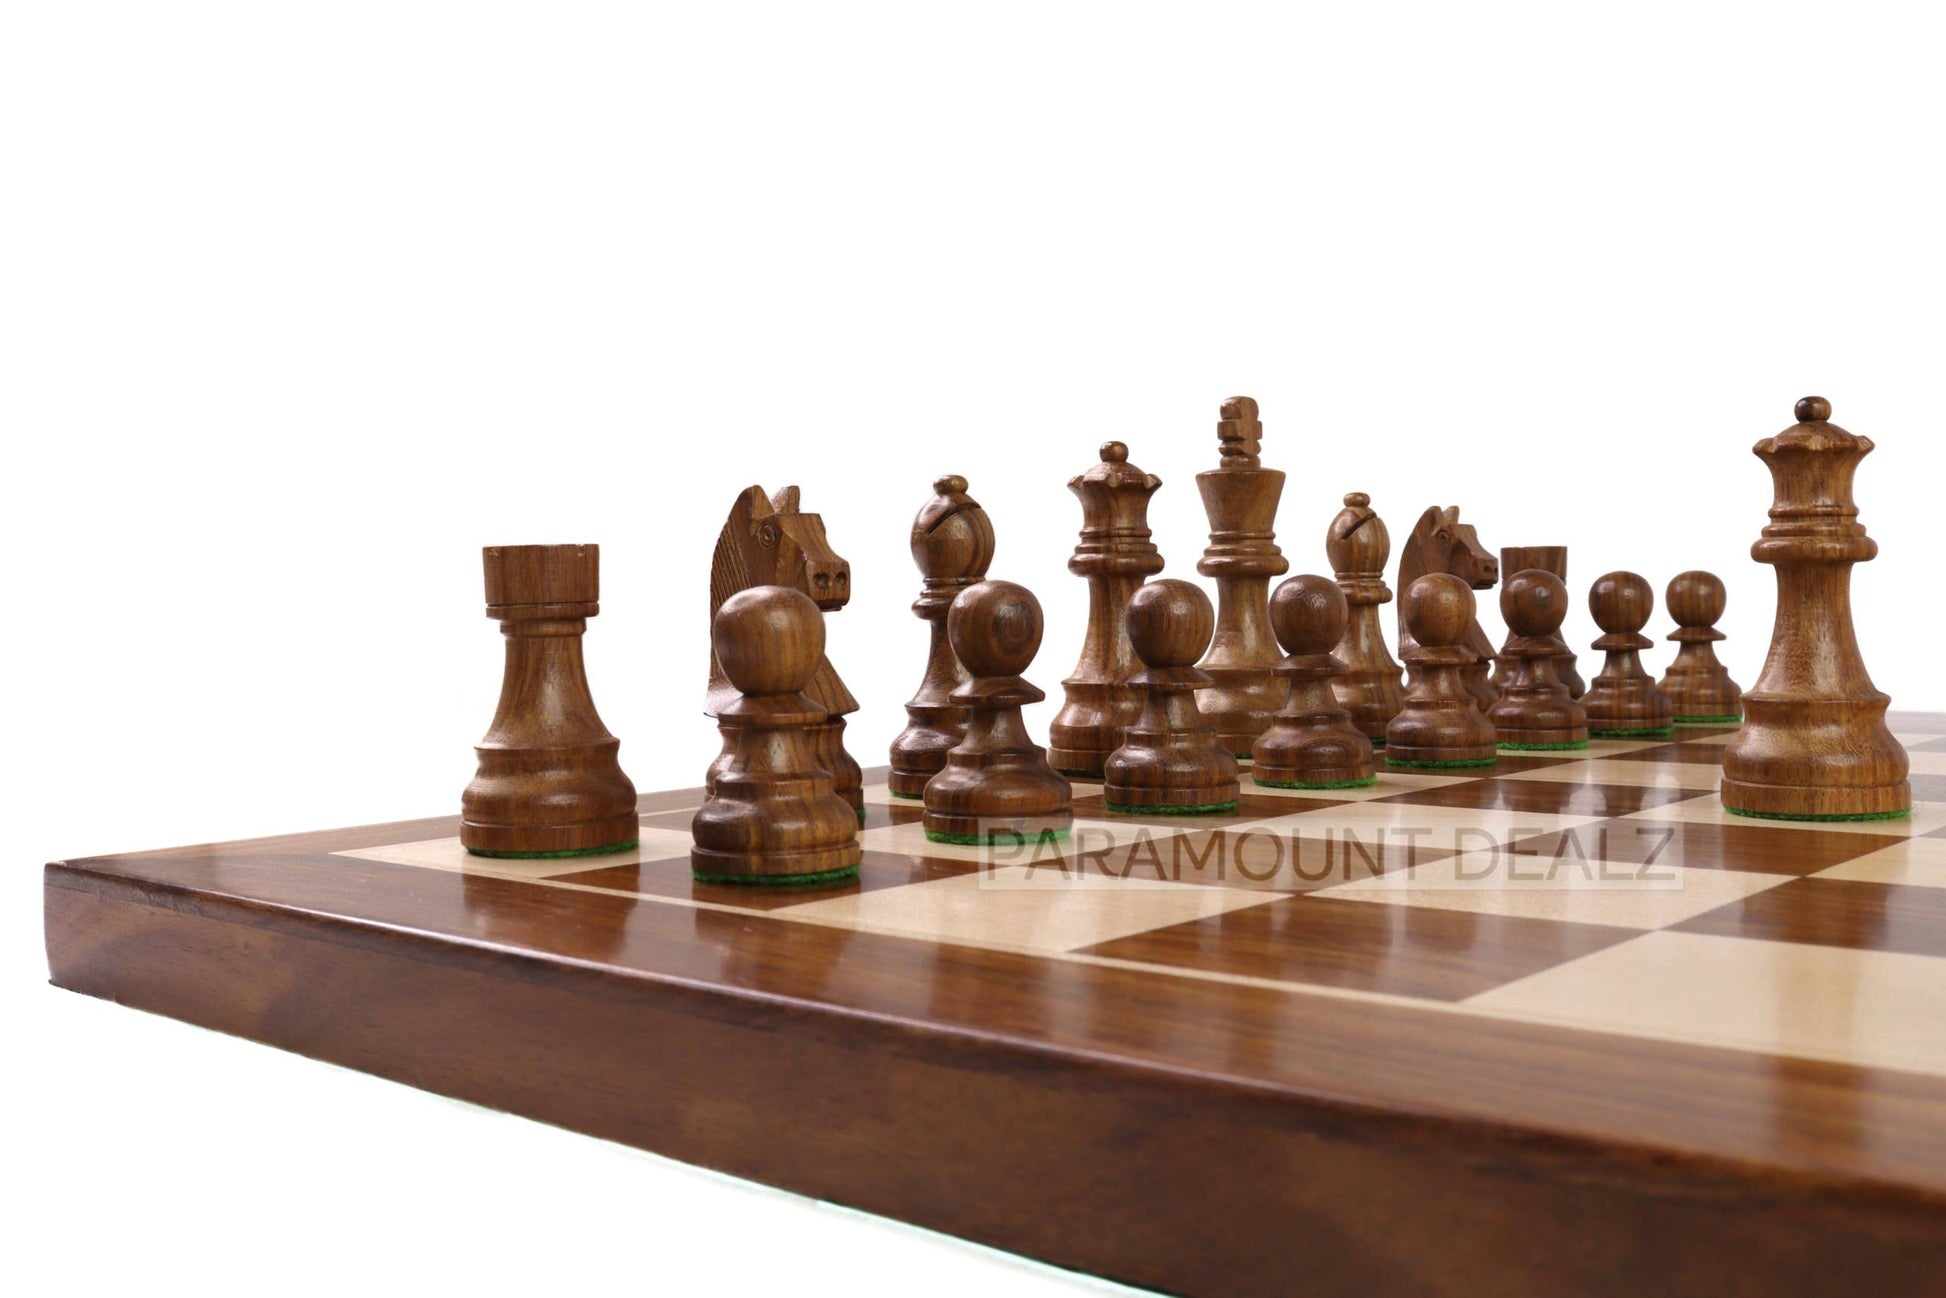 Grand Master Square Cornered Edition 21 inches Wooden chess board